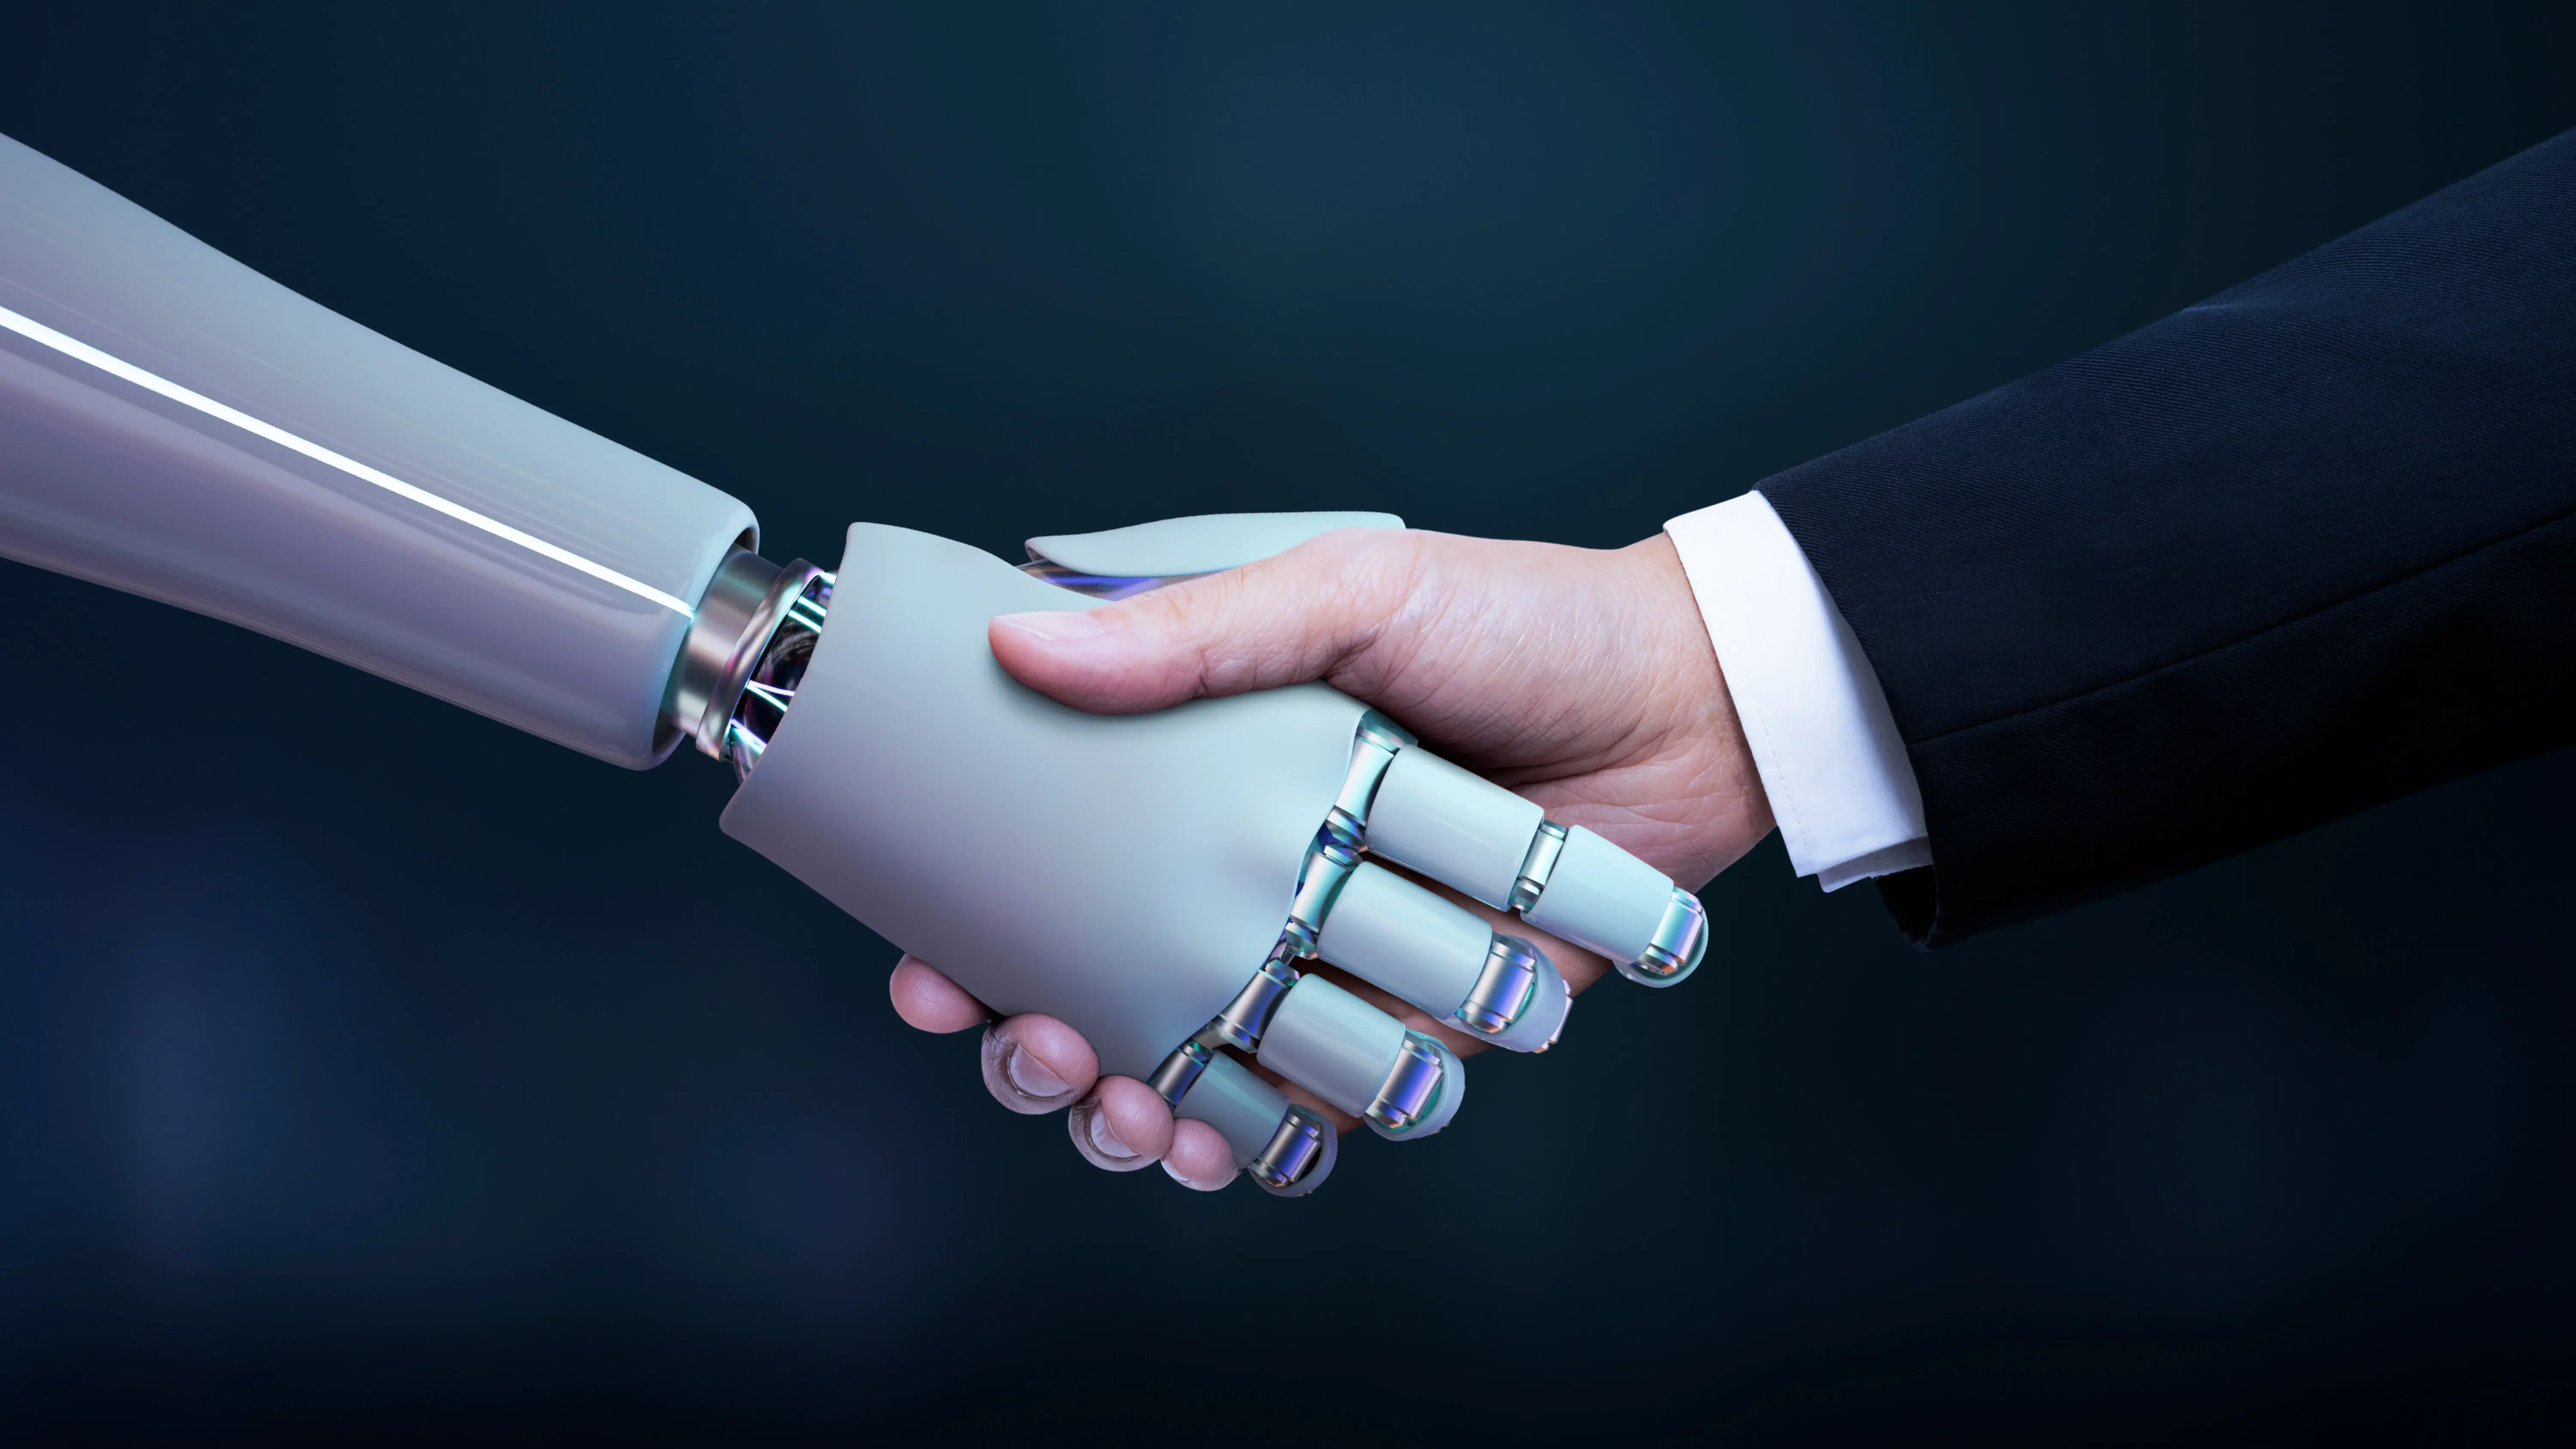 IBM announces the launch of an AI Alliance